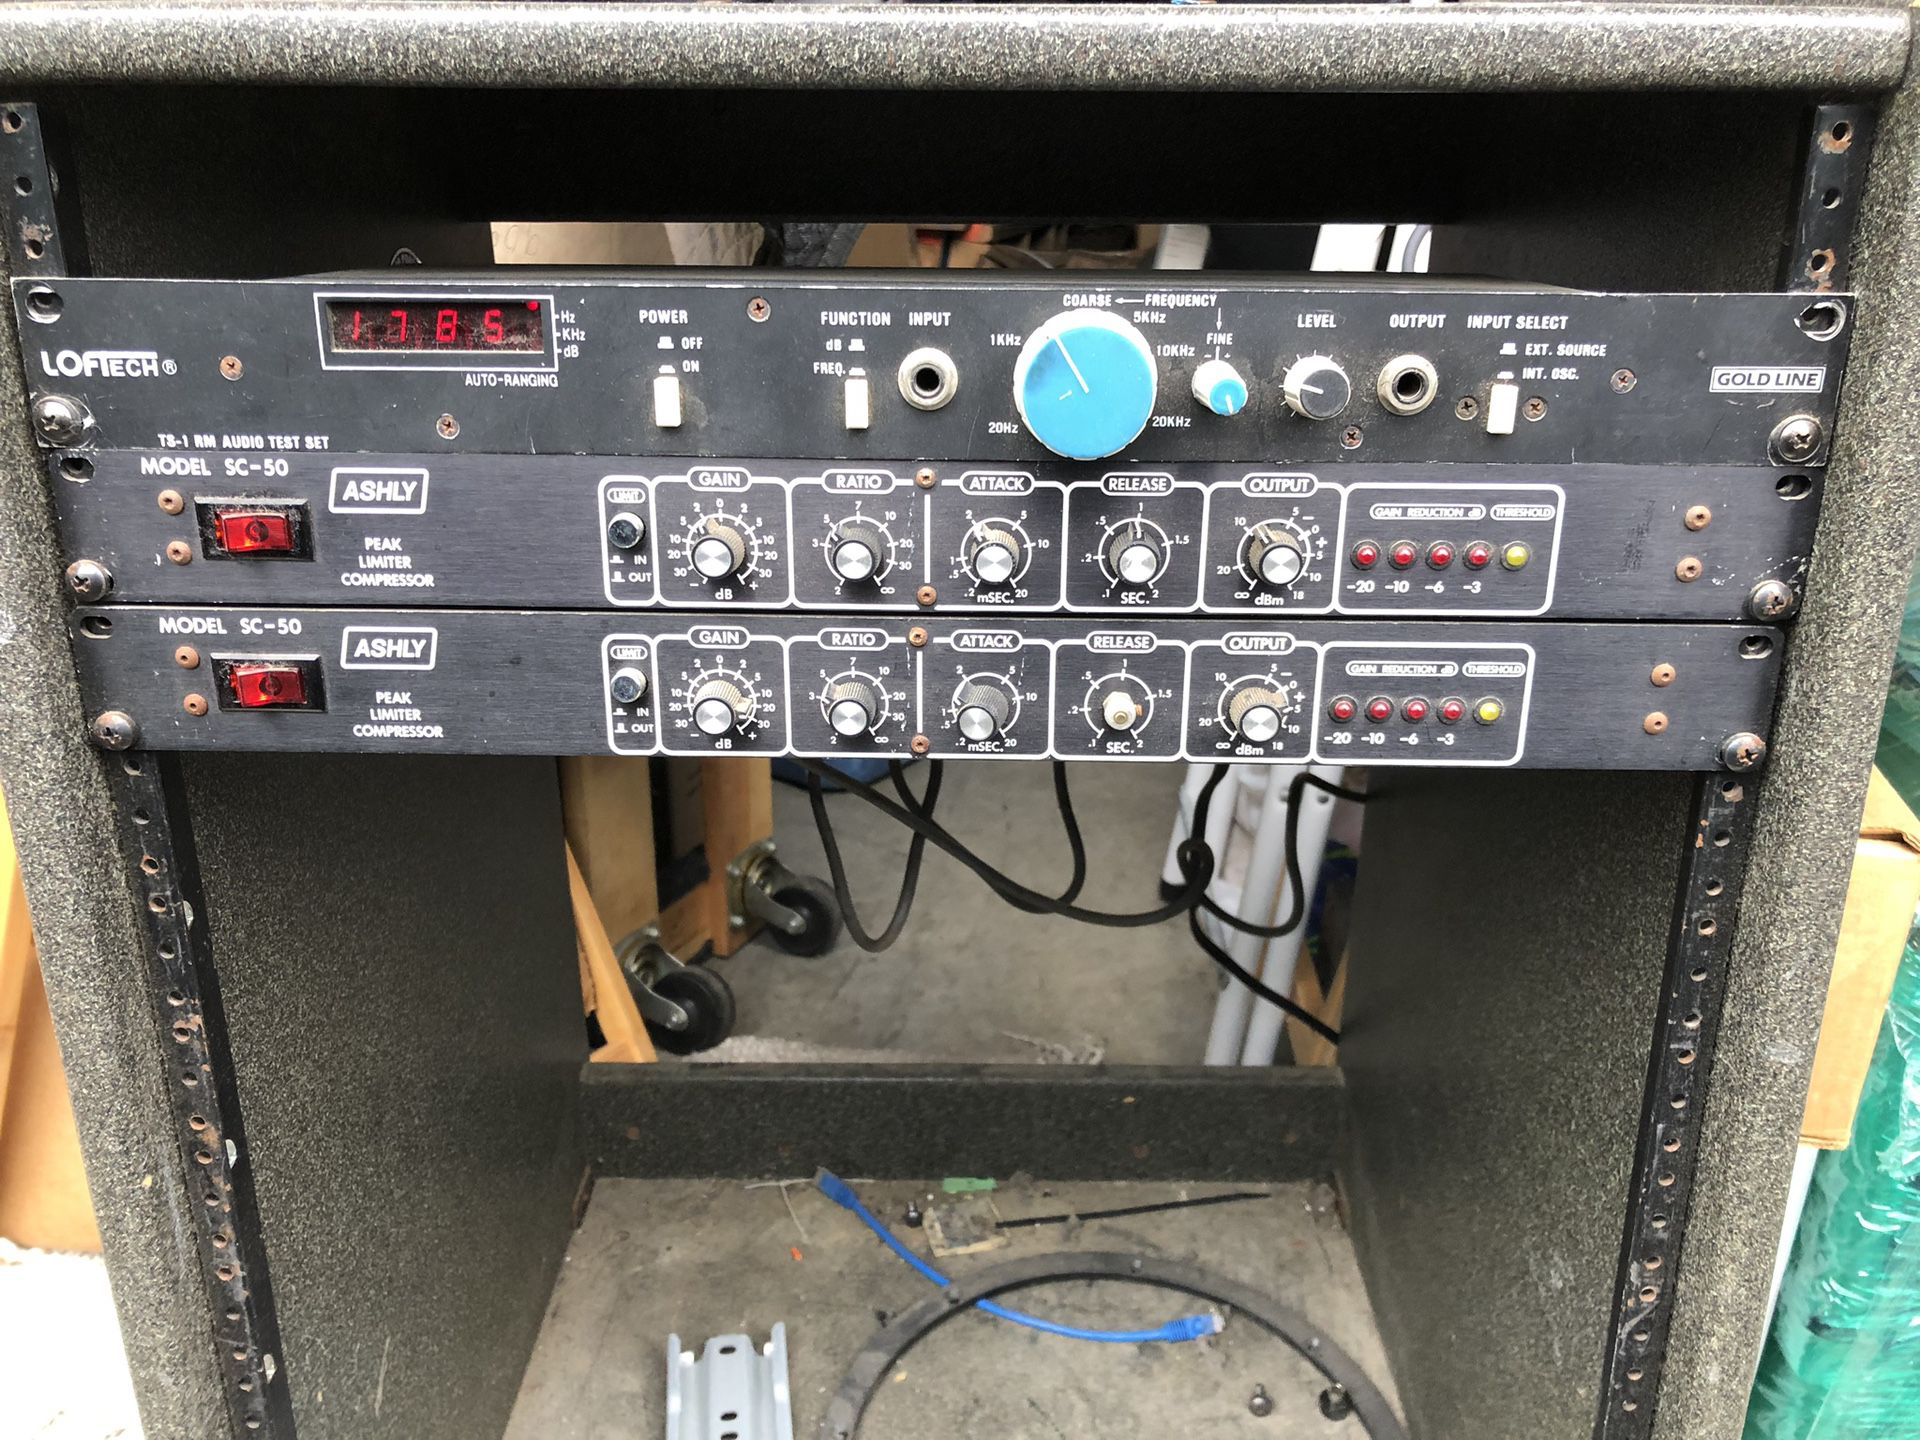 Ashly SC-50 Limiter Compressor (2) and Loftech TS-1 RM Audio Test Set